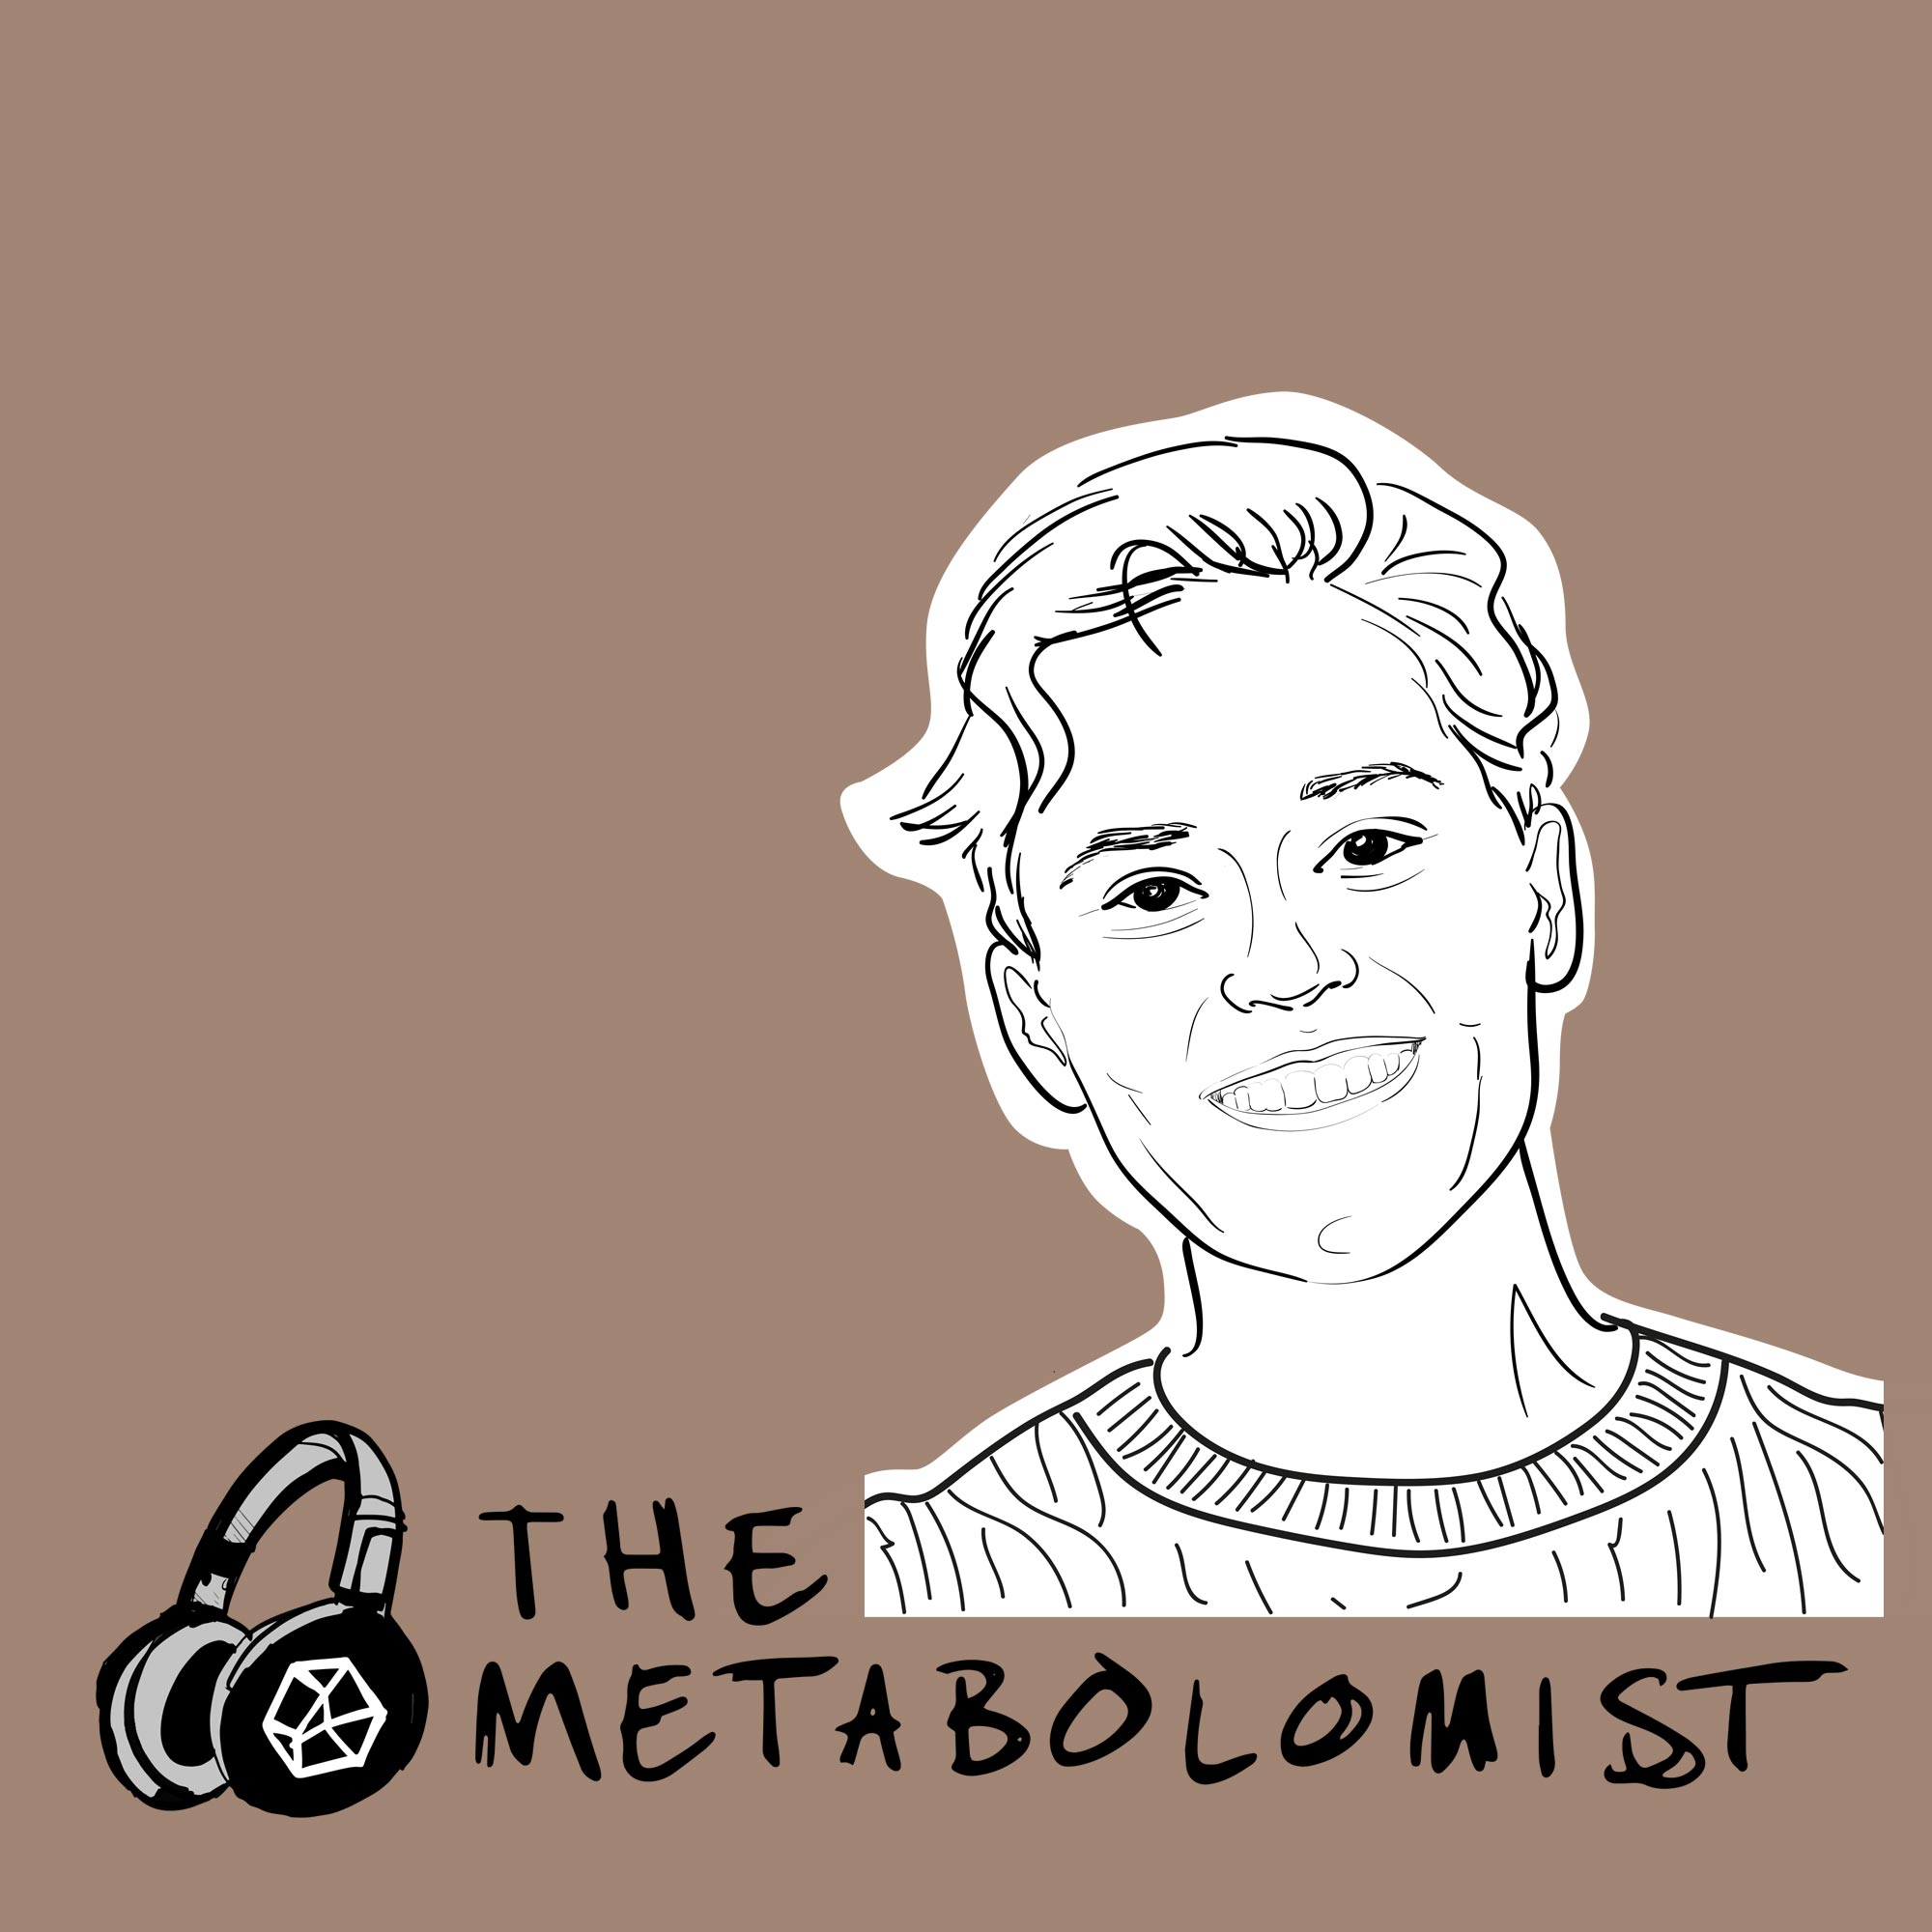 The Metabolomist - Haley Chatelaine